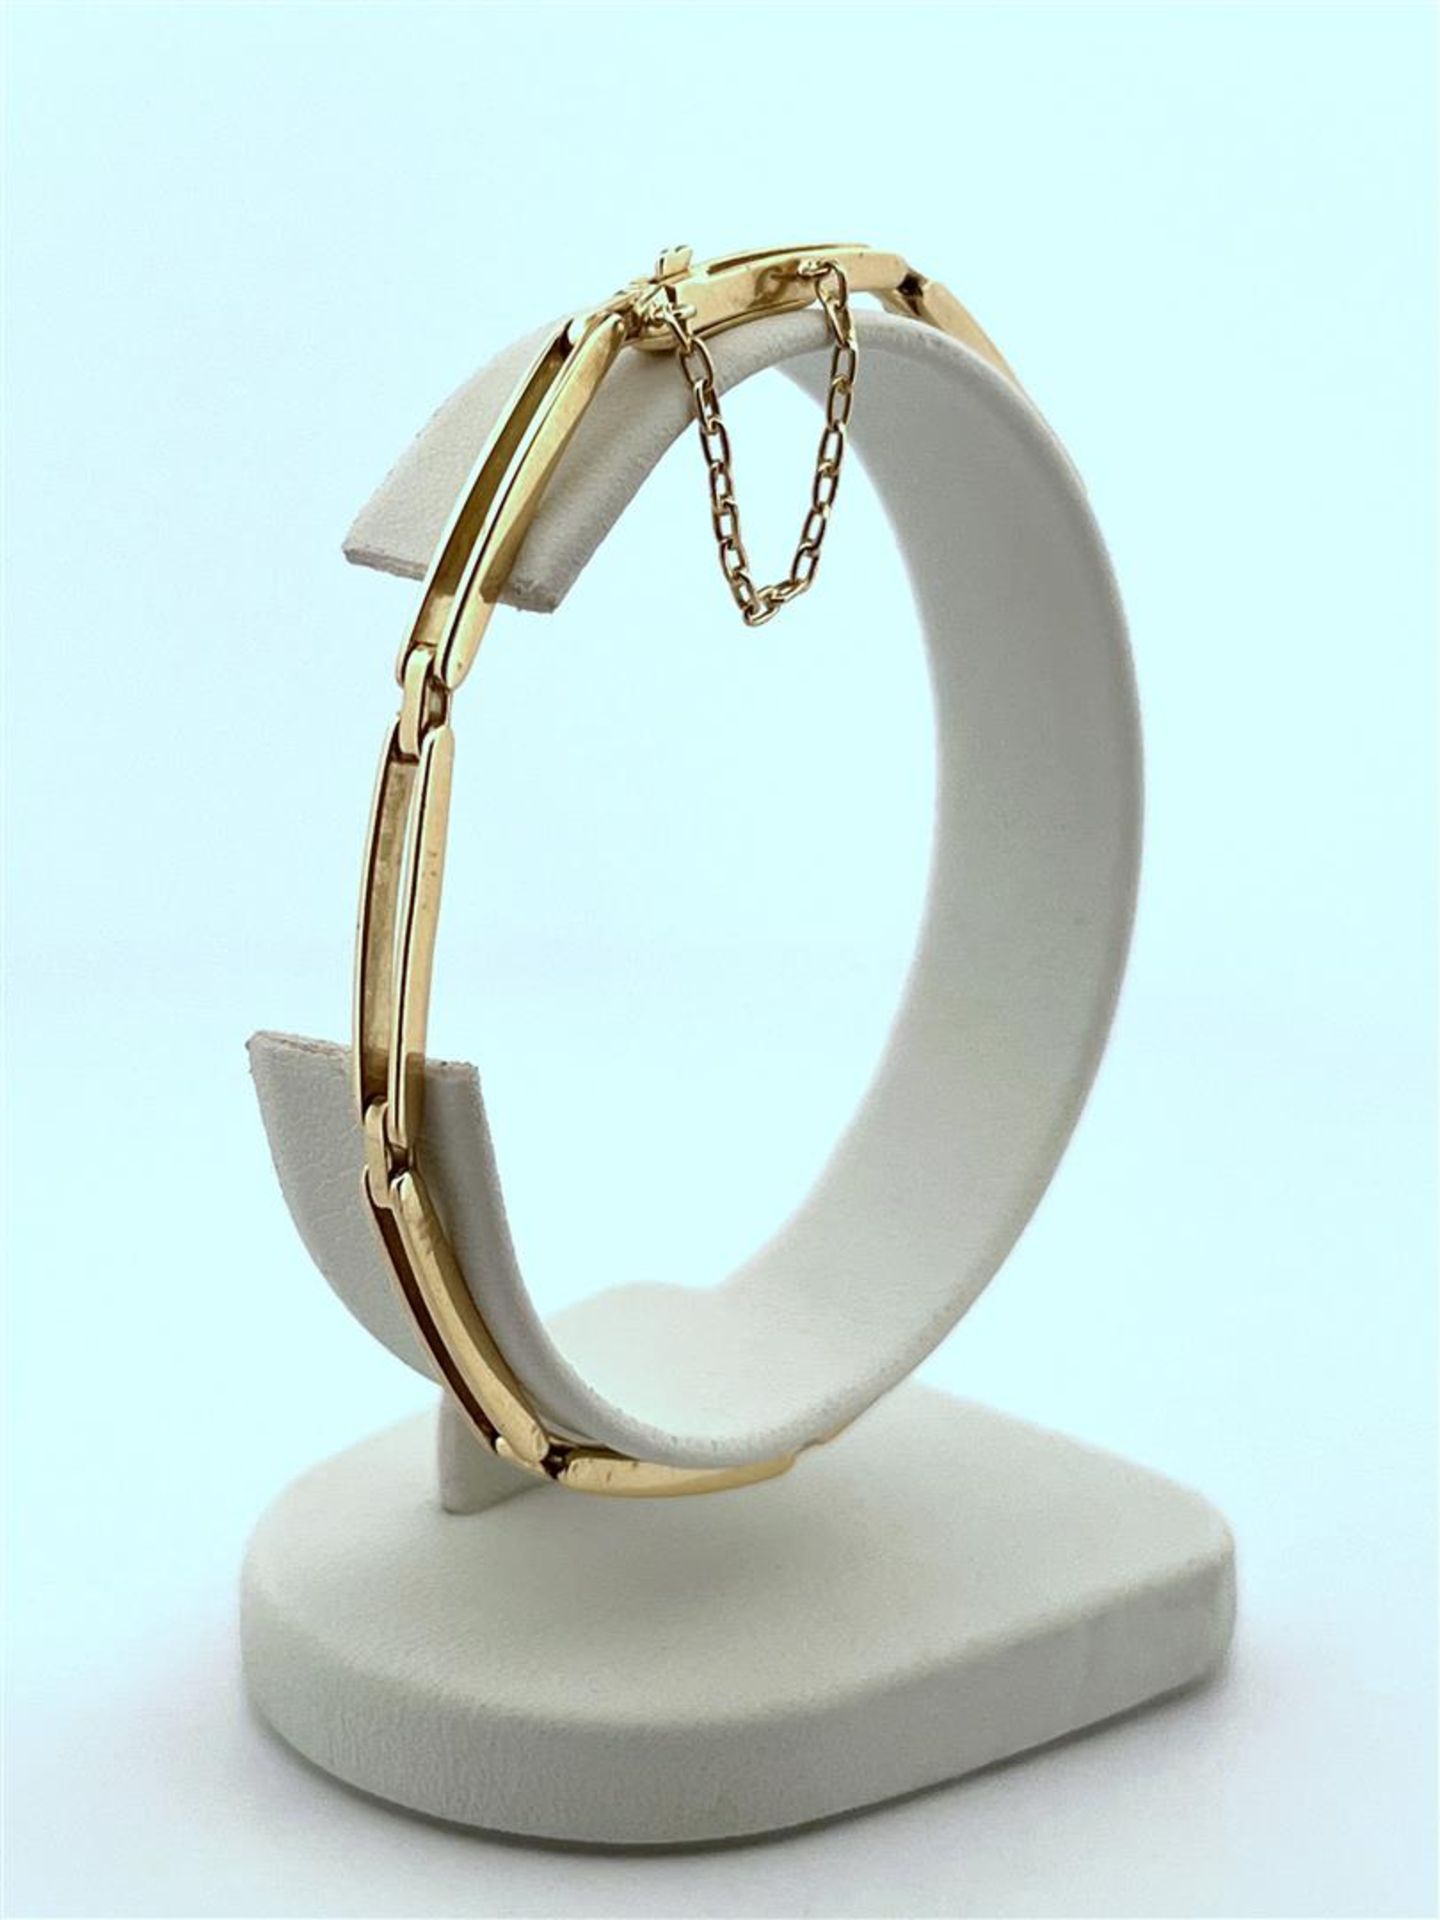 14kt yellow gold bars link bracelet.
Nice bracelet to hang charms on. The bracelet has a sturdy box  - Bild 5 aus 5